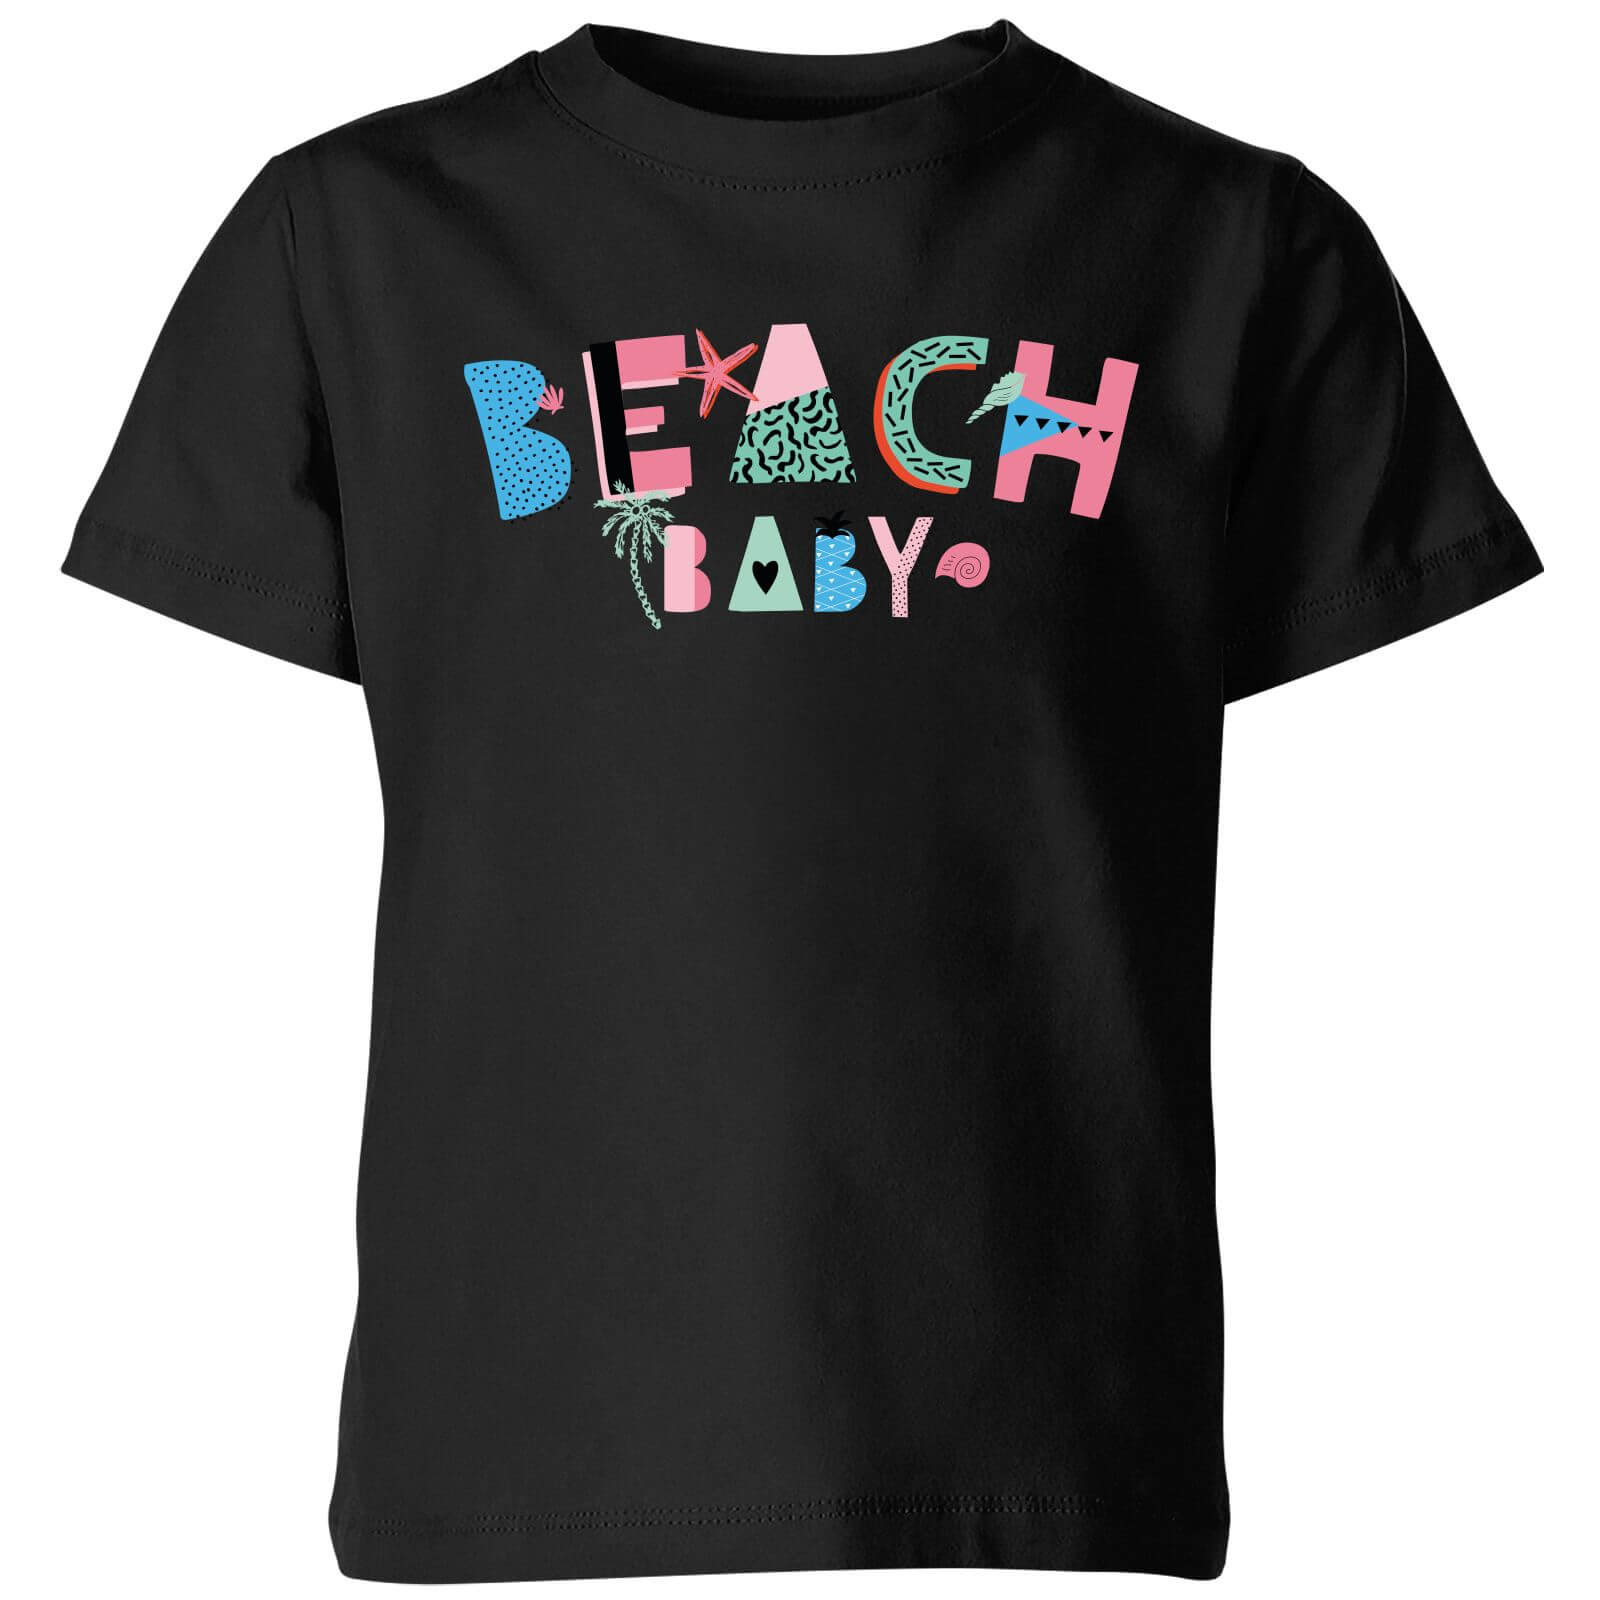 My Little Rascal Beach Baby Kids' T-Shirt - Black - 3-4 Years - Black